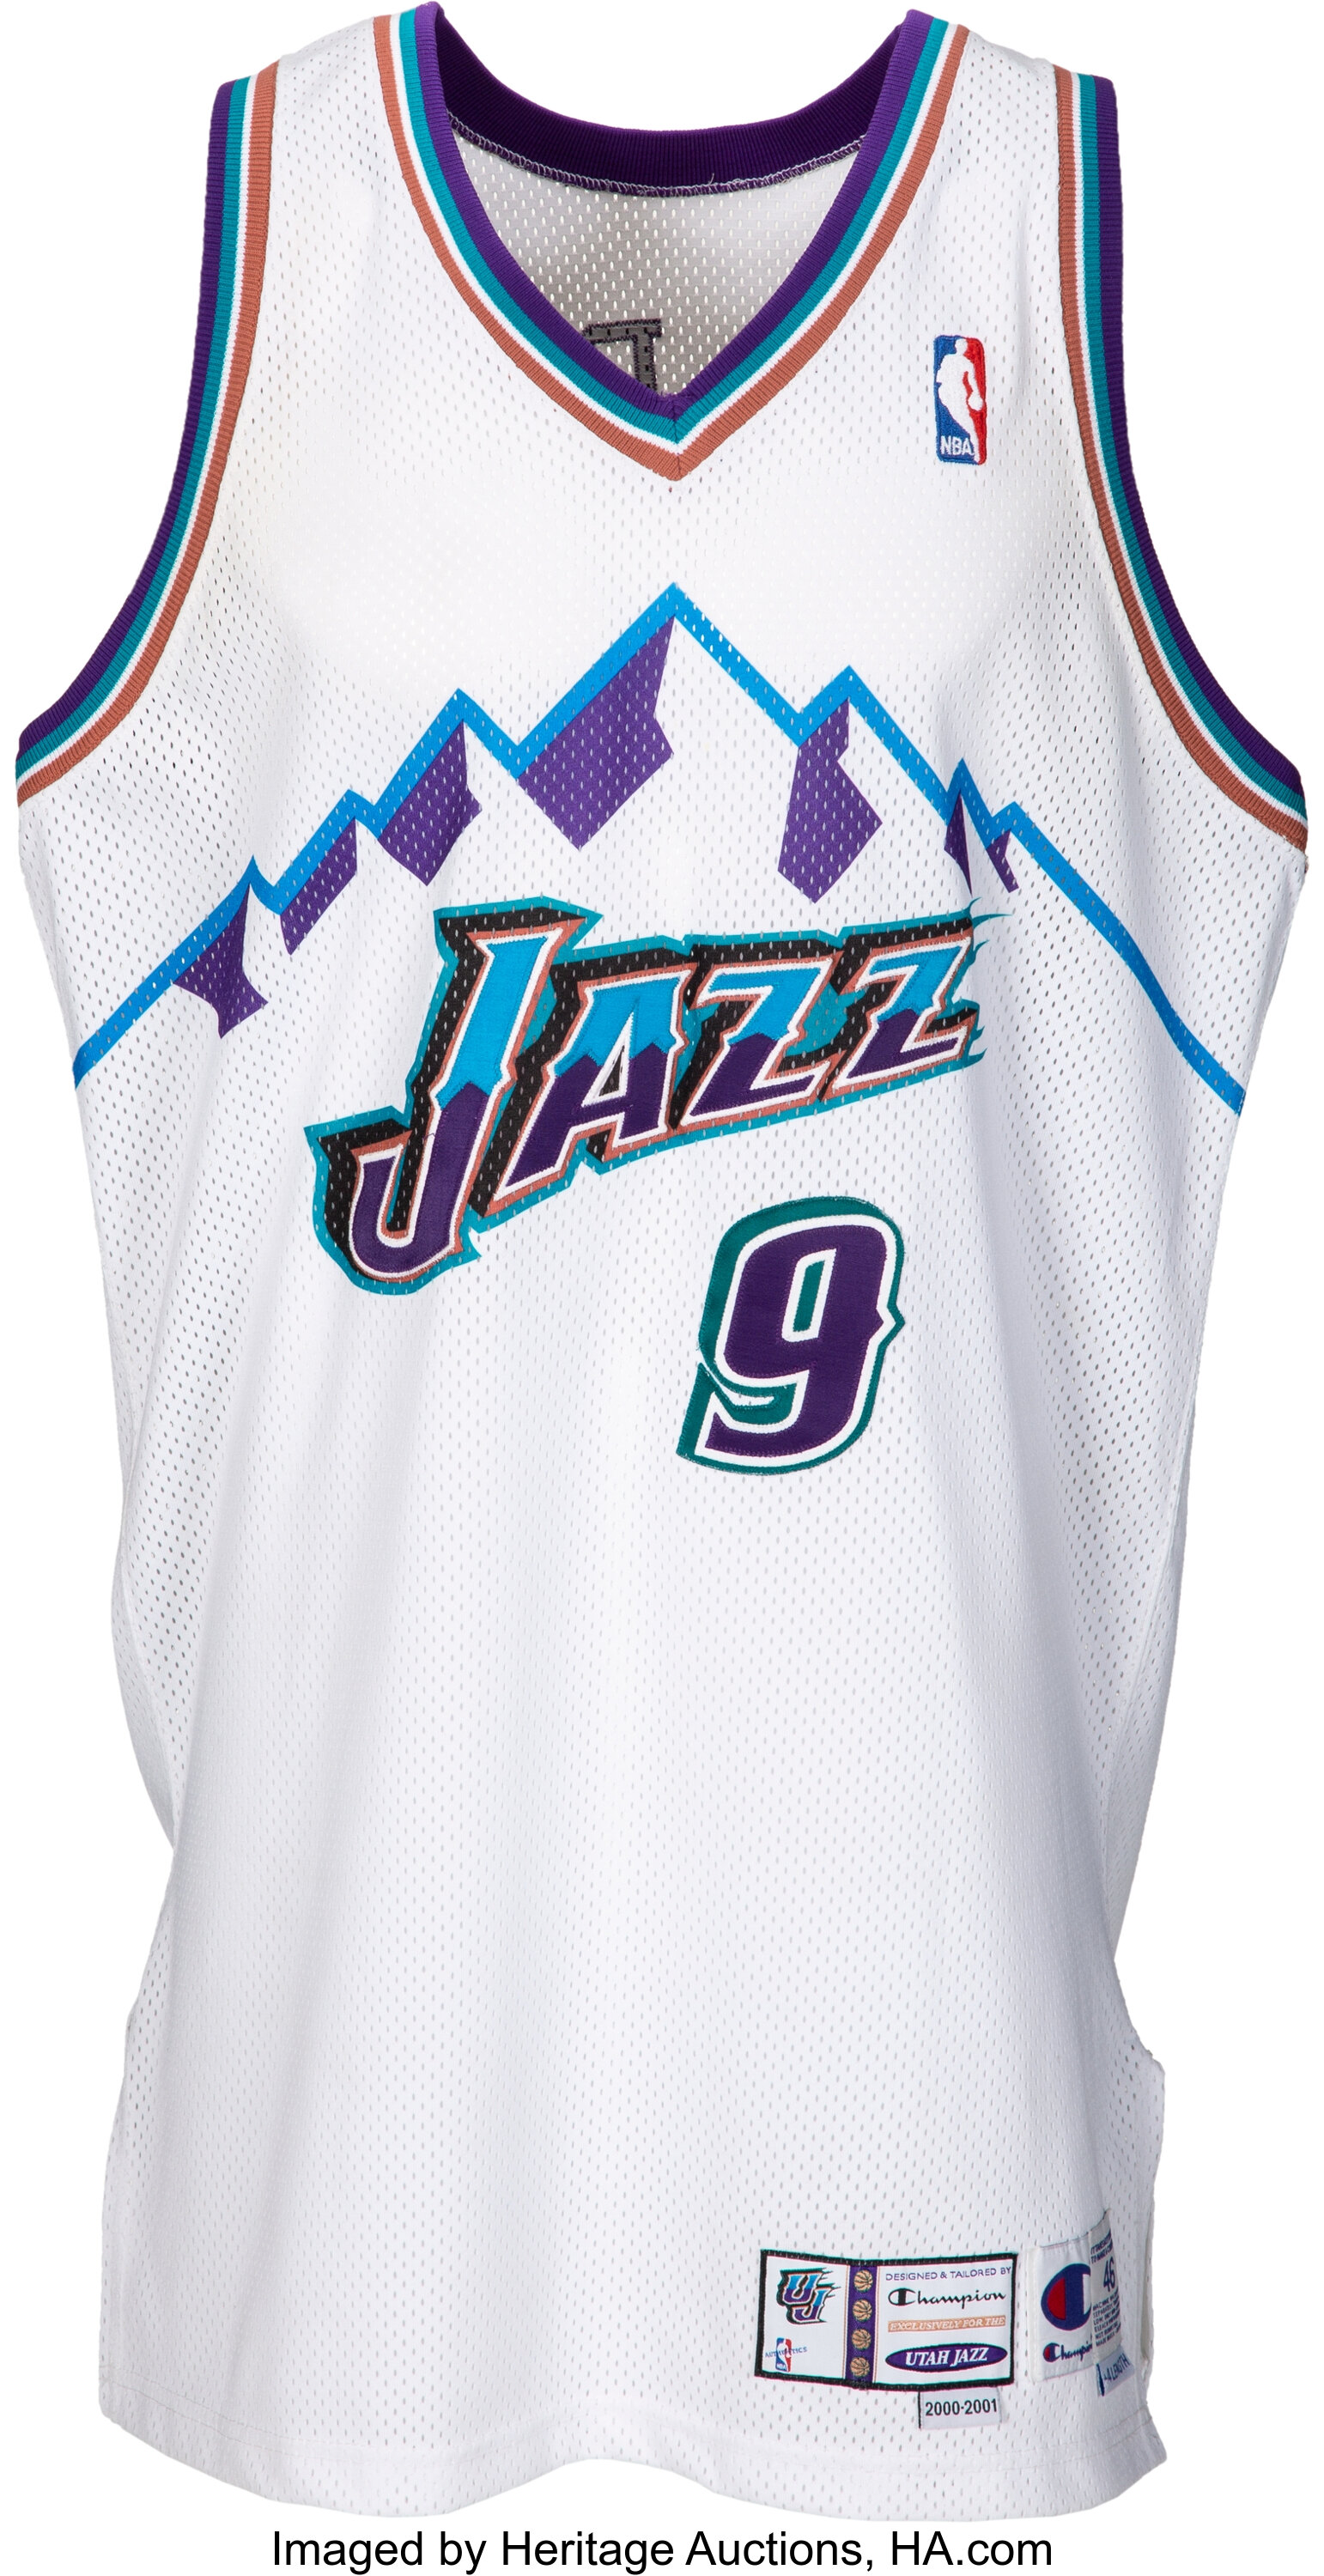 Utah Jazz - Get a free Utah Jazz jersey when you open a